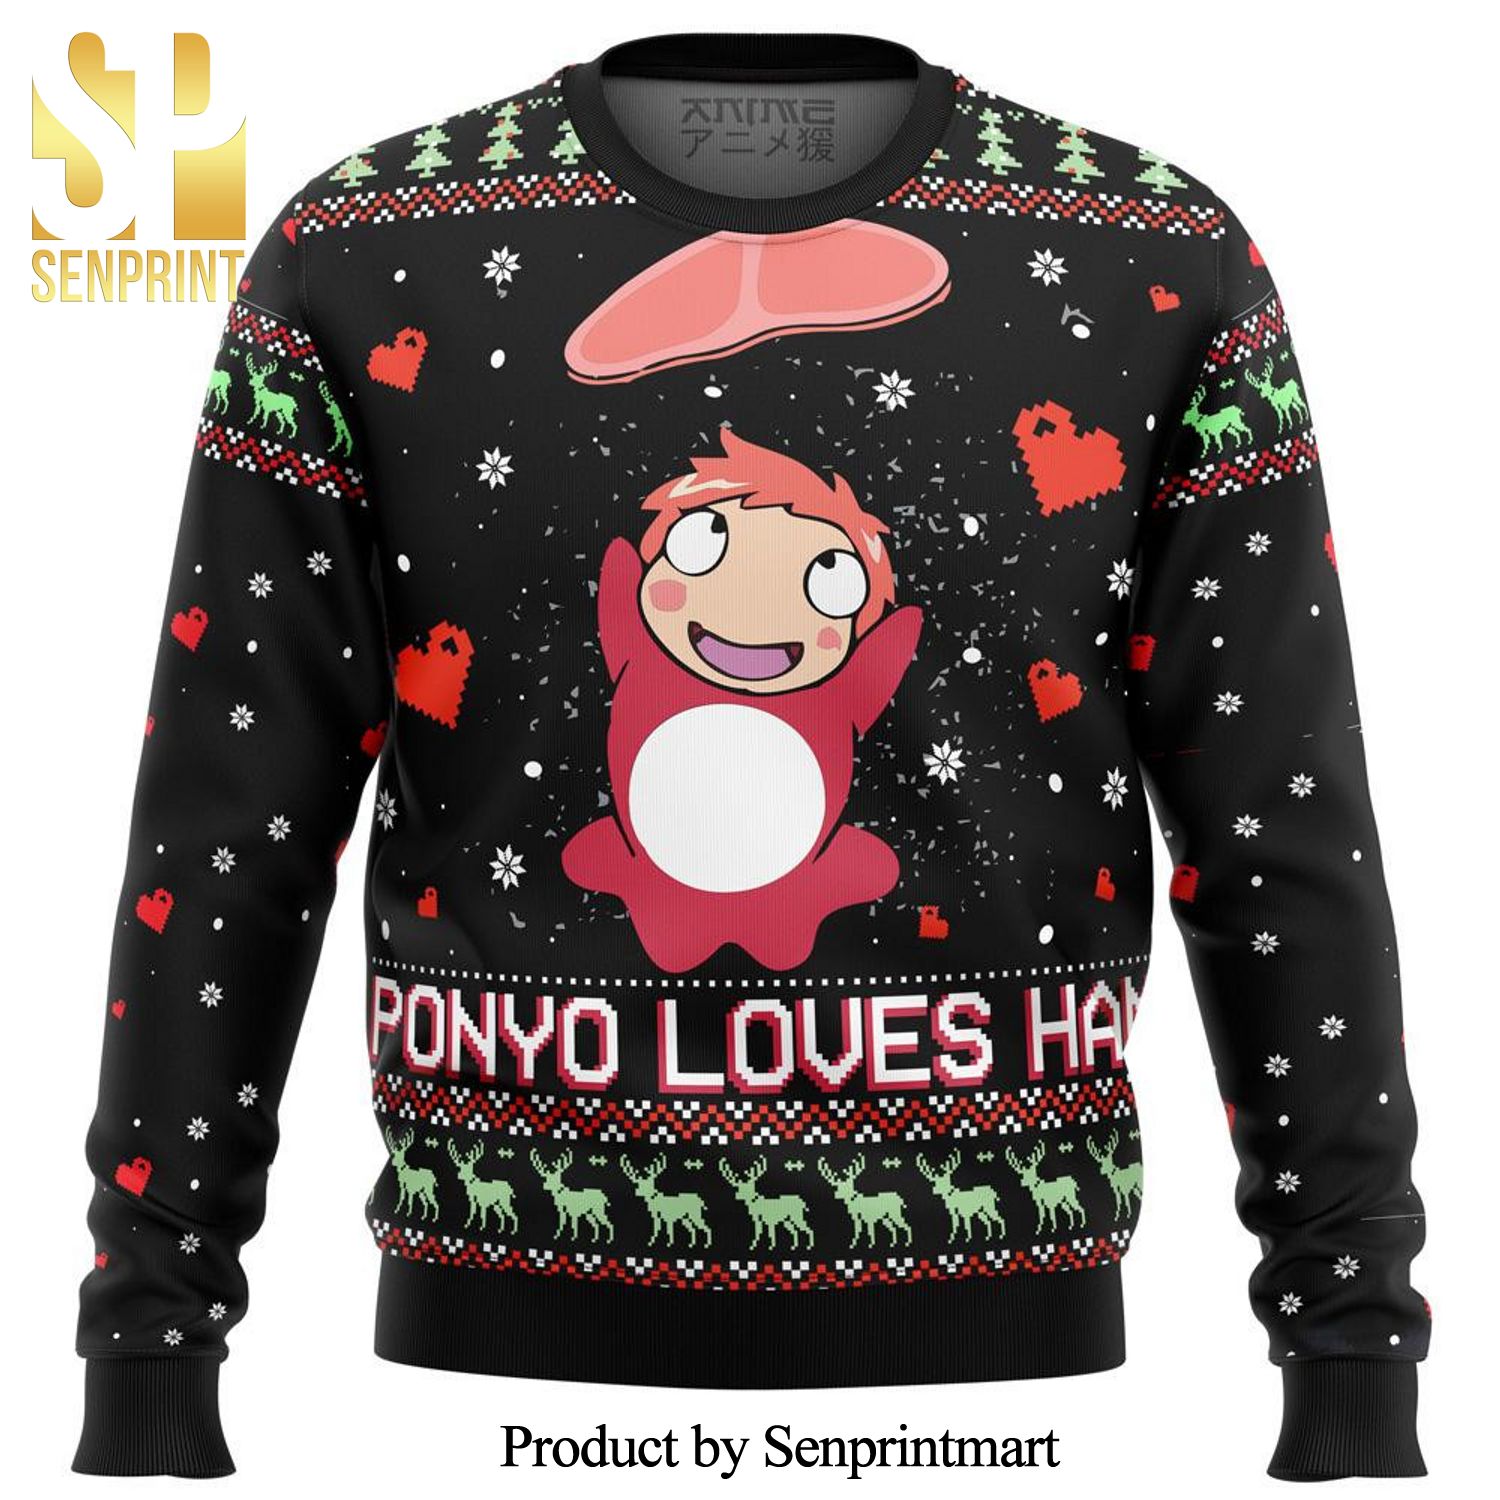 Ghibli Ponyo Loves Ham Snowflake Manga Anime Knitted Ugly Christmas Sweater